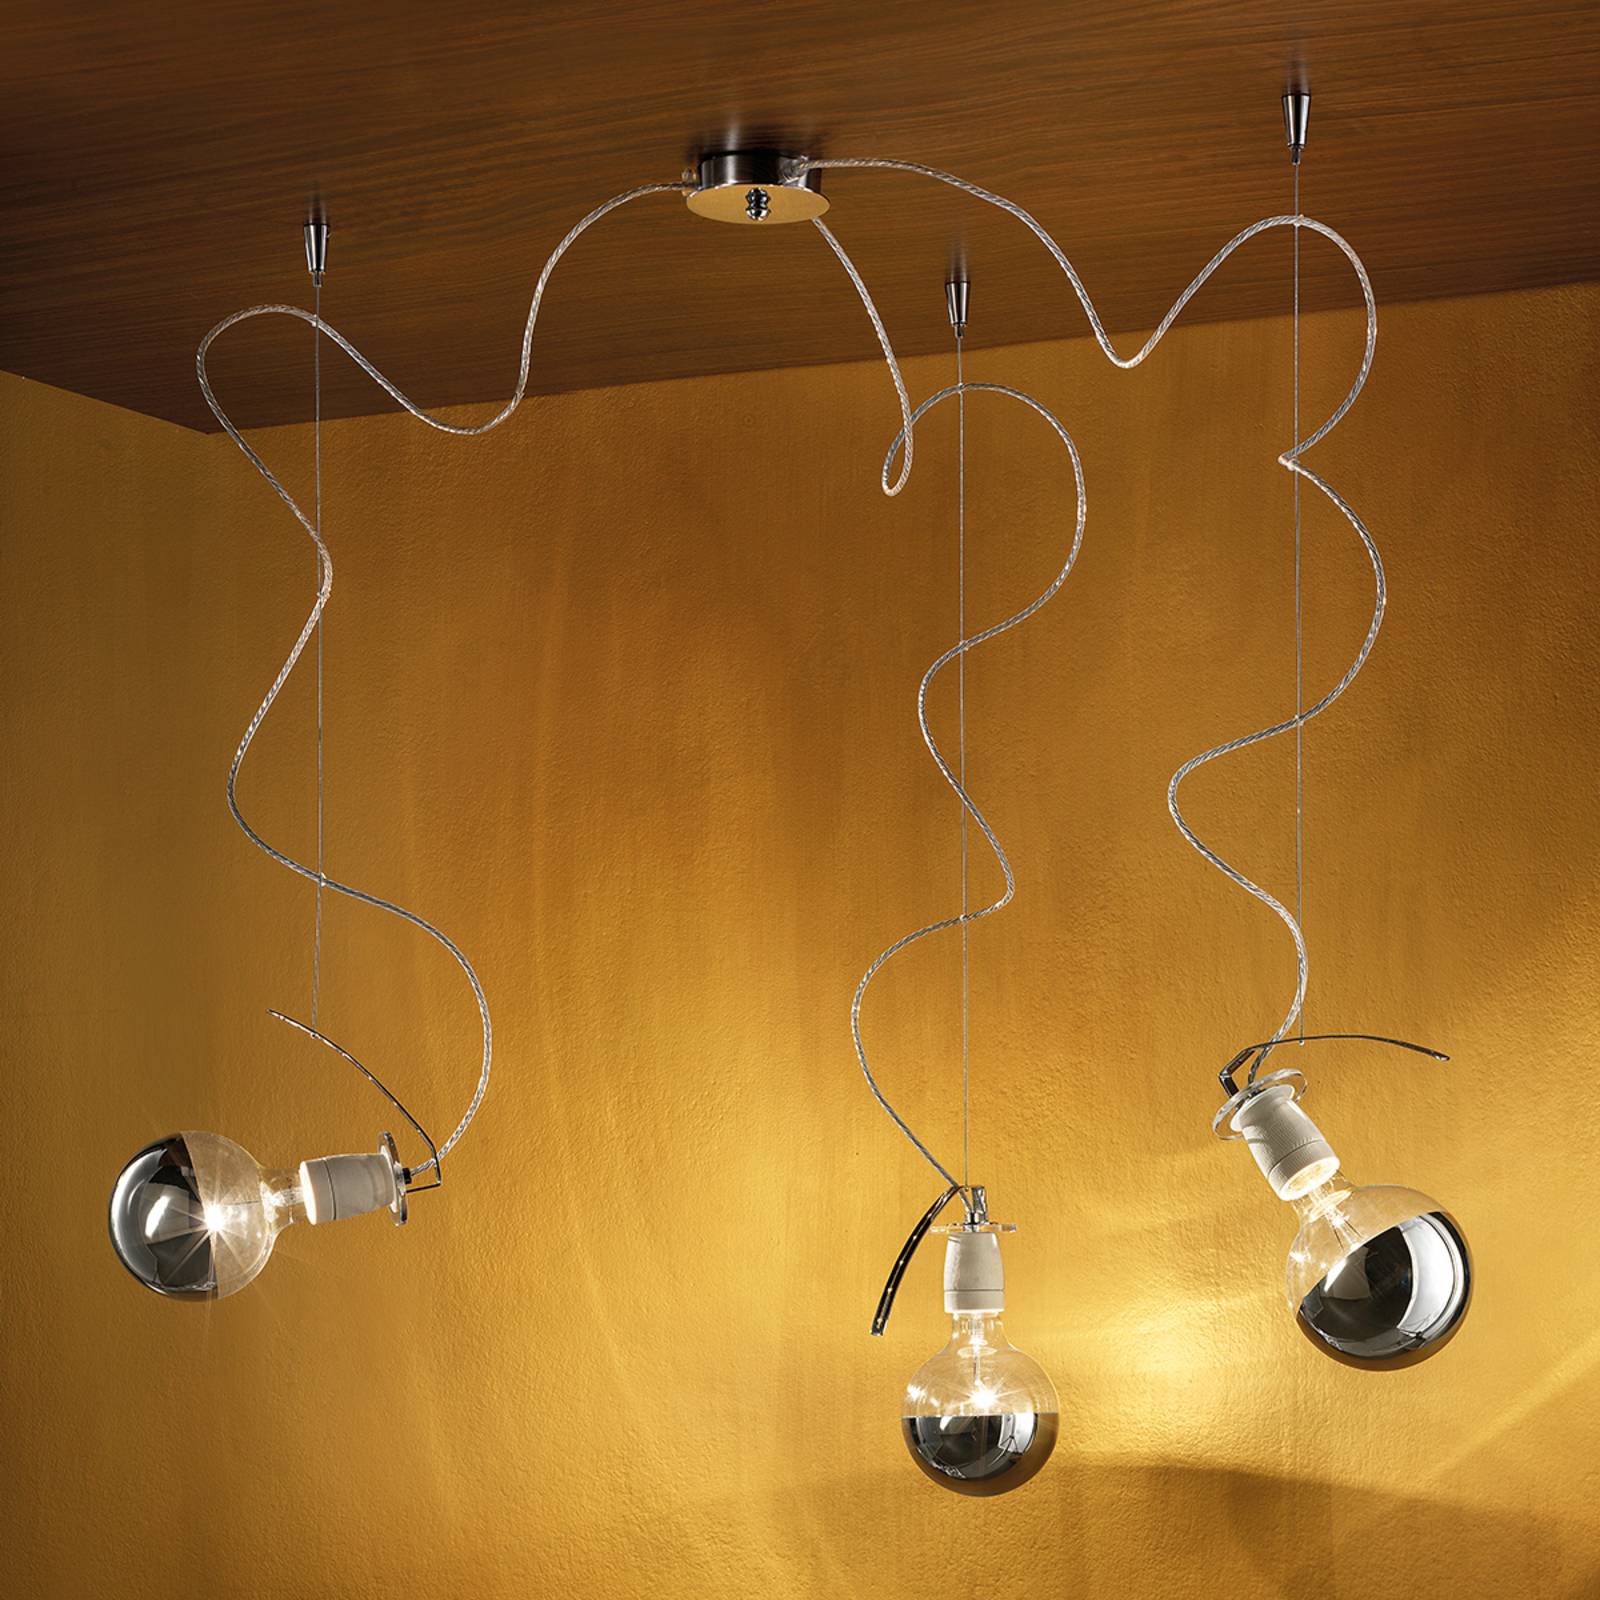 Hanglamp Orchestra 2 met drie lampjes